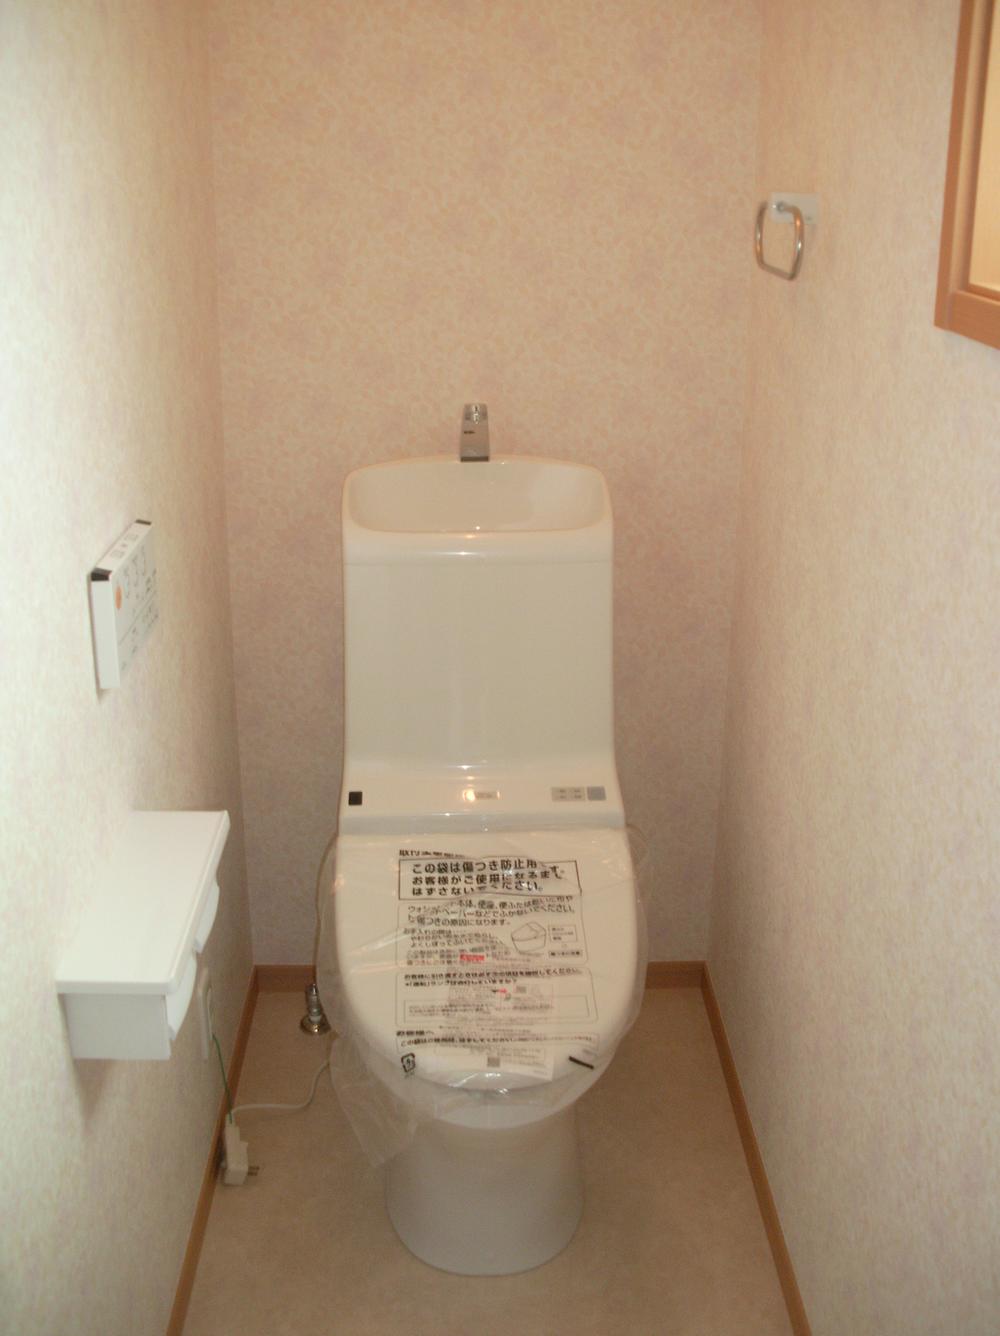 Toilet. Construction example: toilet